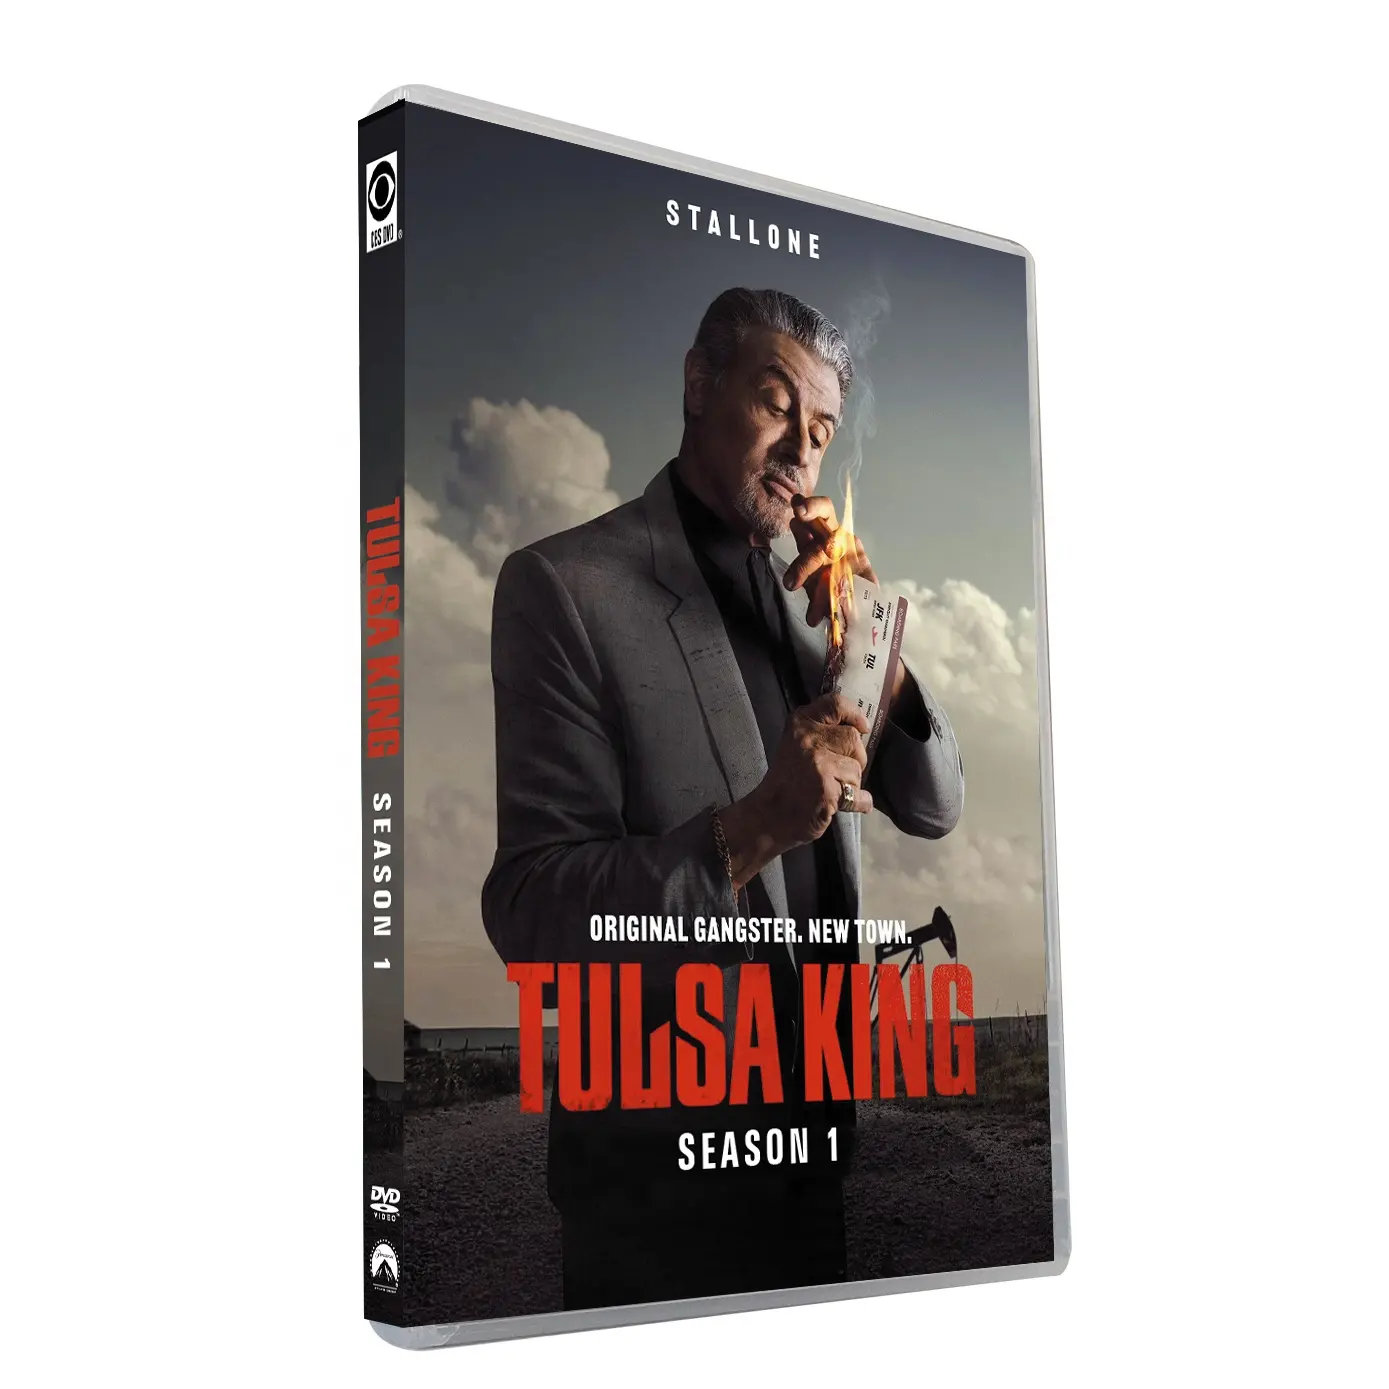 Tulsa King DVD Season 1 film asli 3 disk musim pertama lengkap film DVD terbaru Tulsa King